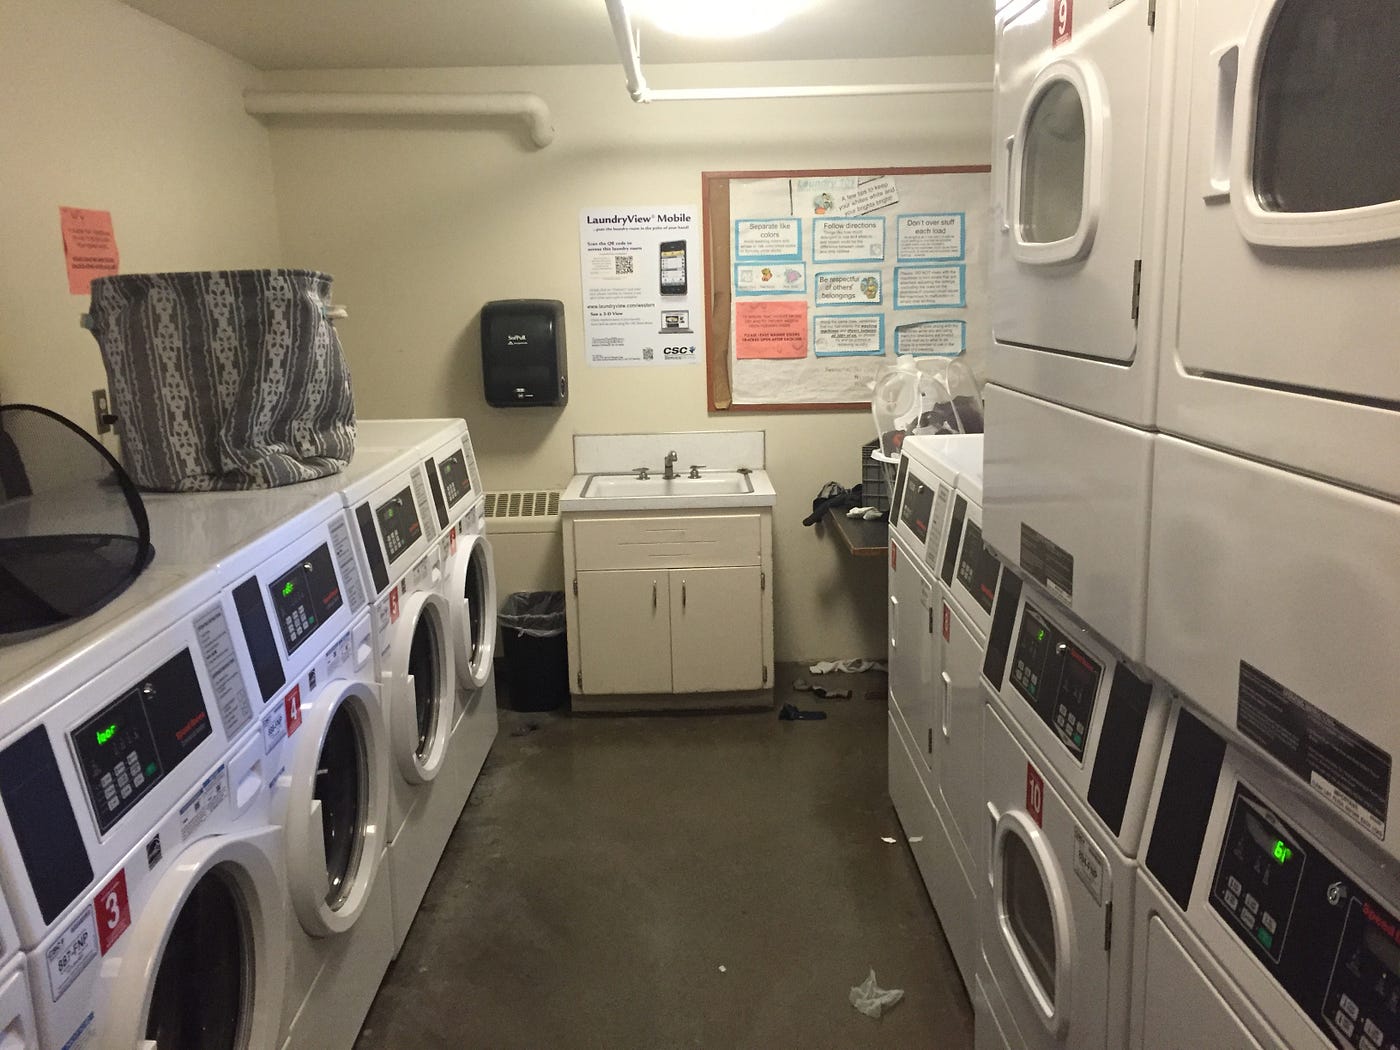 Laundry Quarters Bag, College Dorm Necessity, Laundry, Apartment